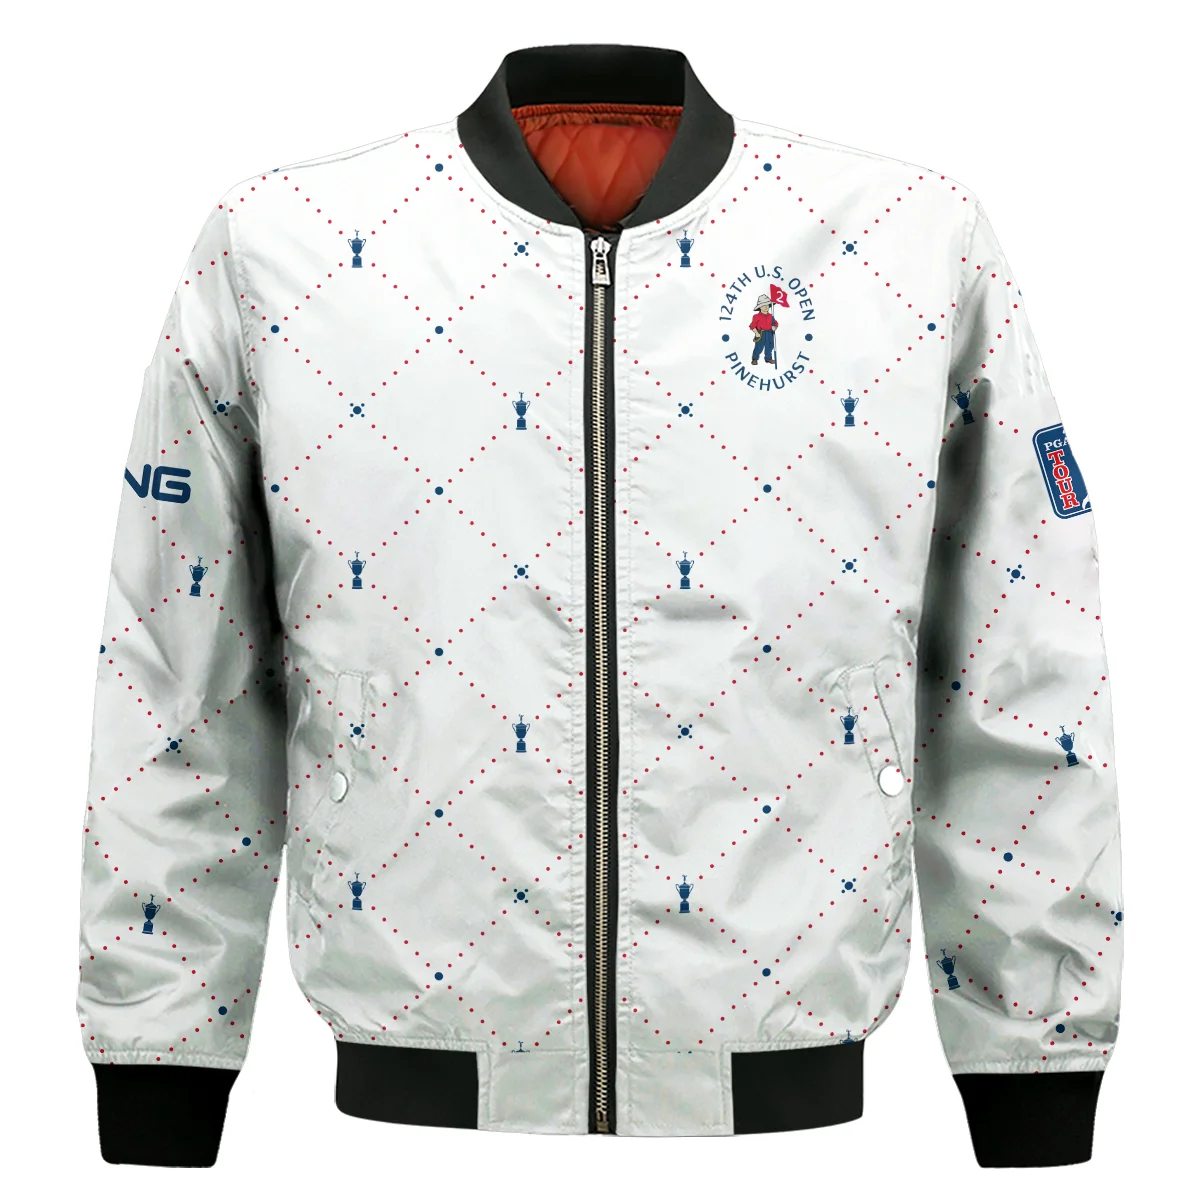 Argyle Pattern With Cup 124th U.S. Open Pinehurst Ping Zipper Polo Shirt Style Classic Zipper Polo Shirt For Men